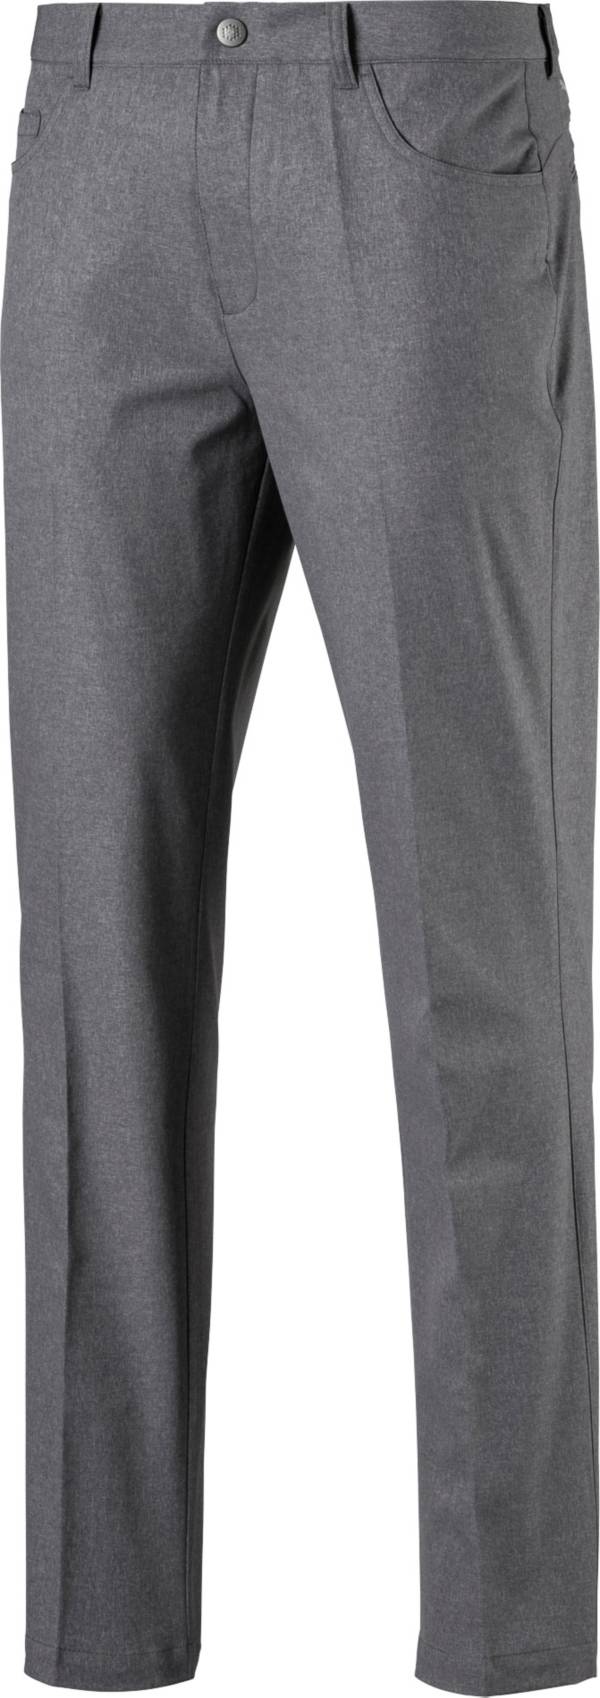 PUMA Men's Jackpot 5 Pocket Heather Golf Pants product image